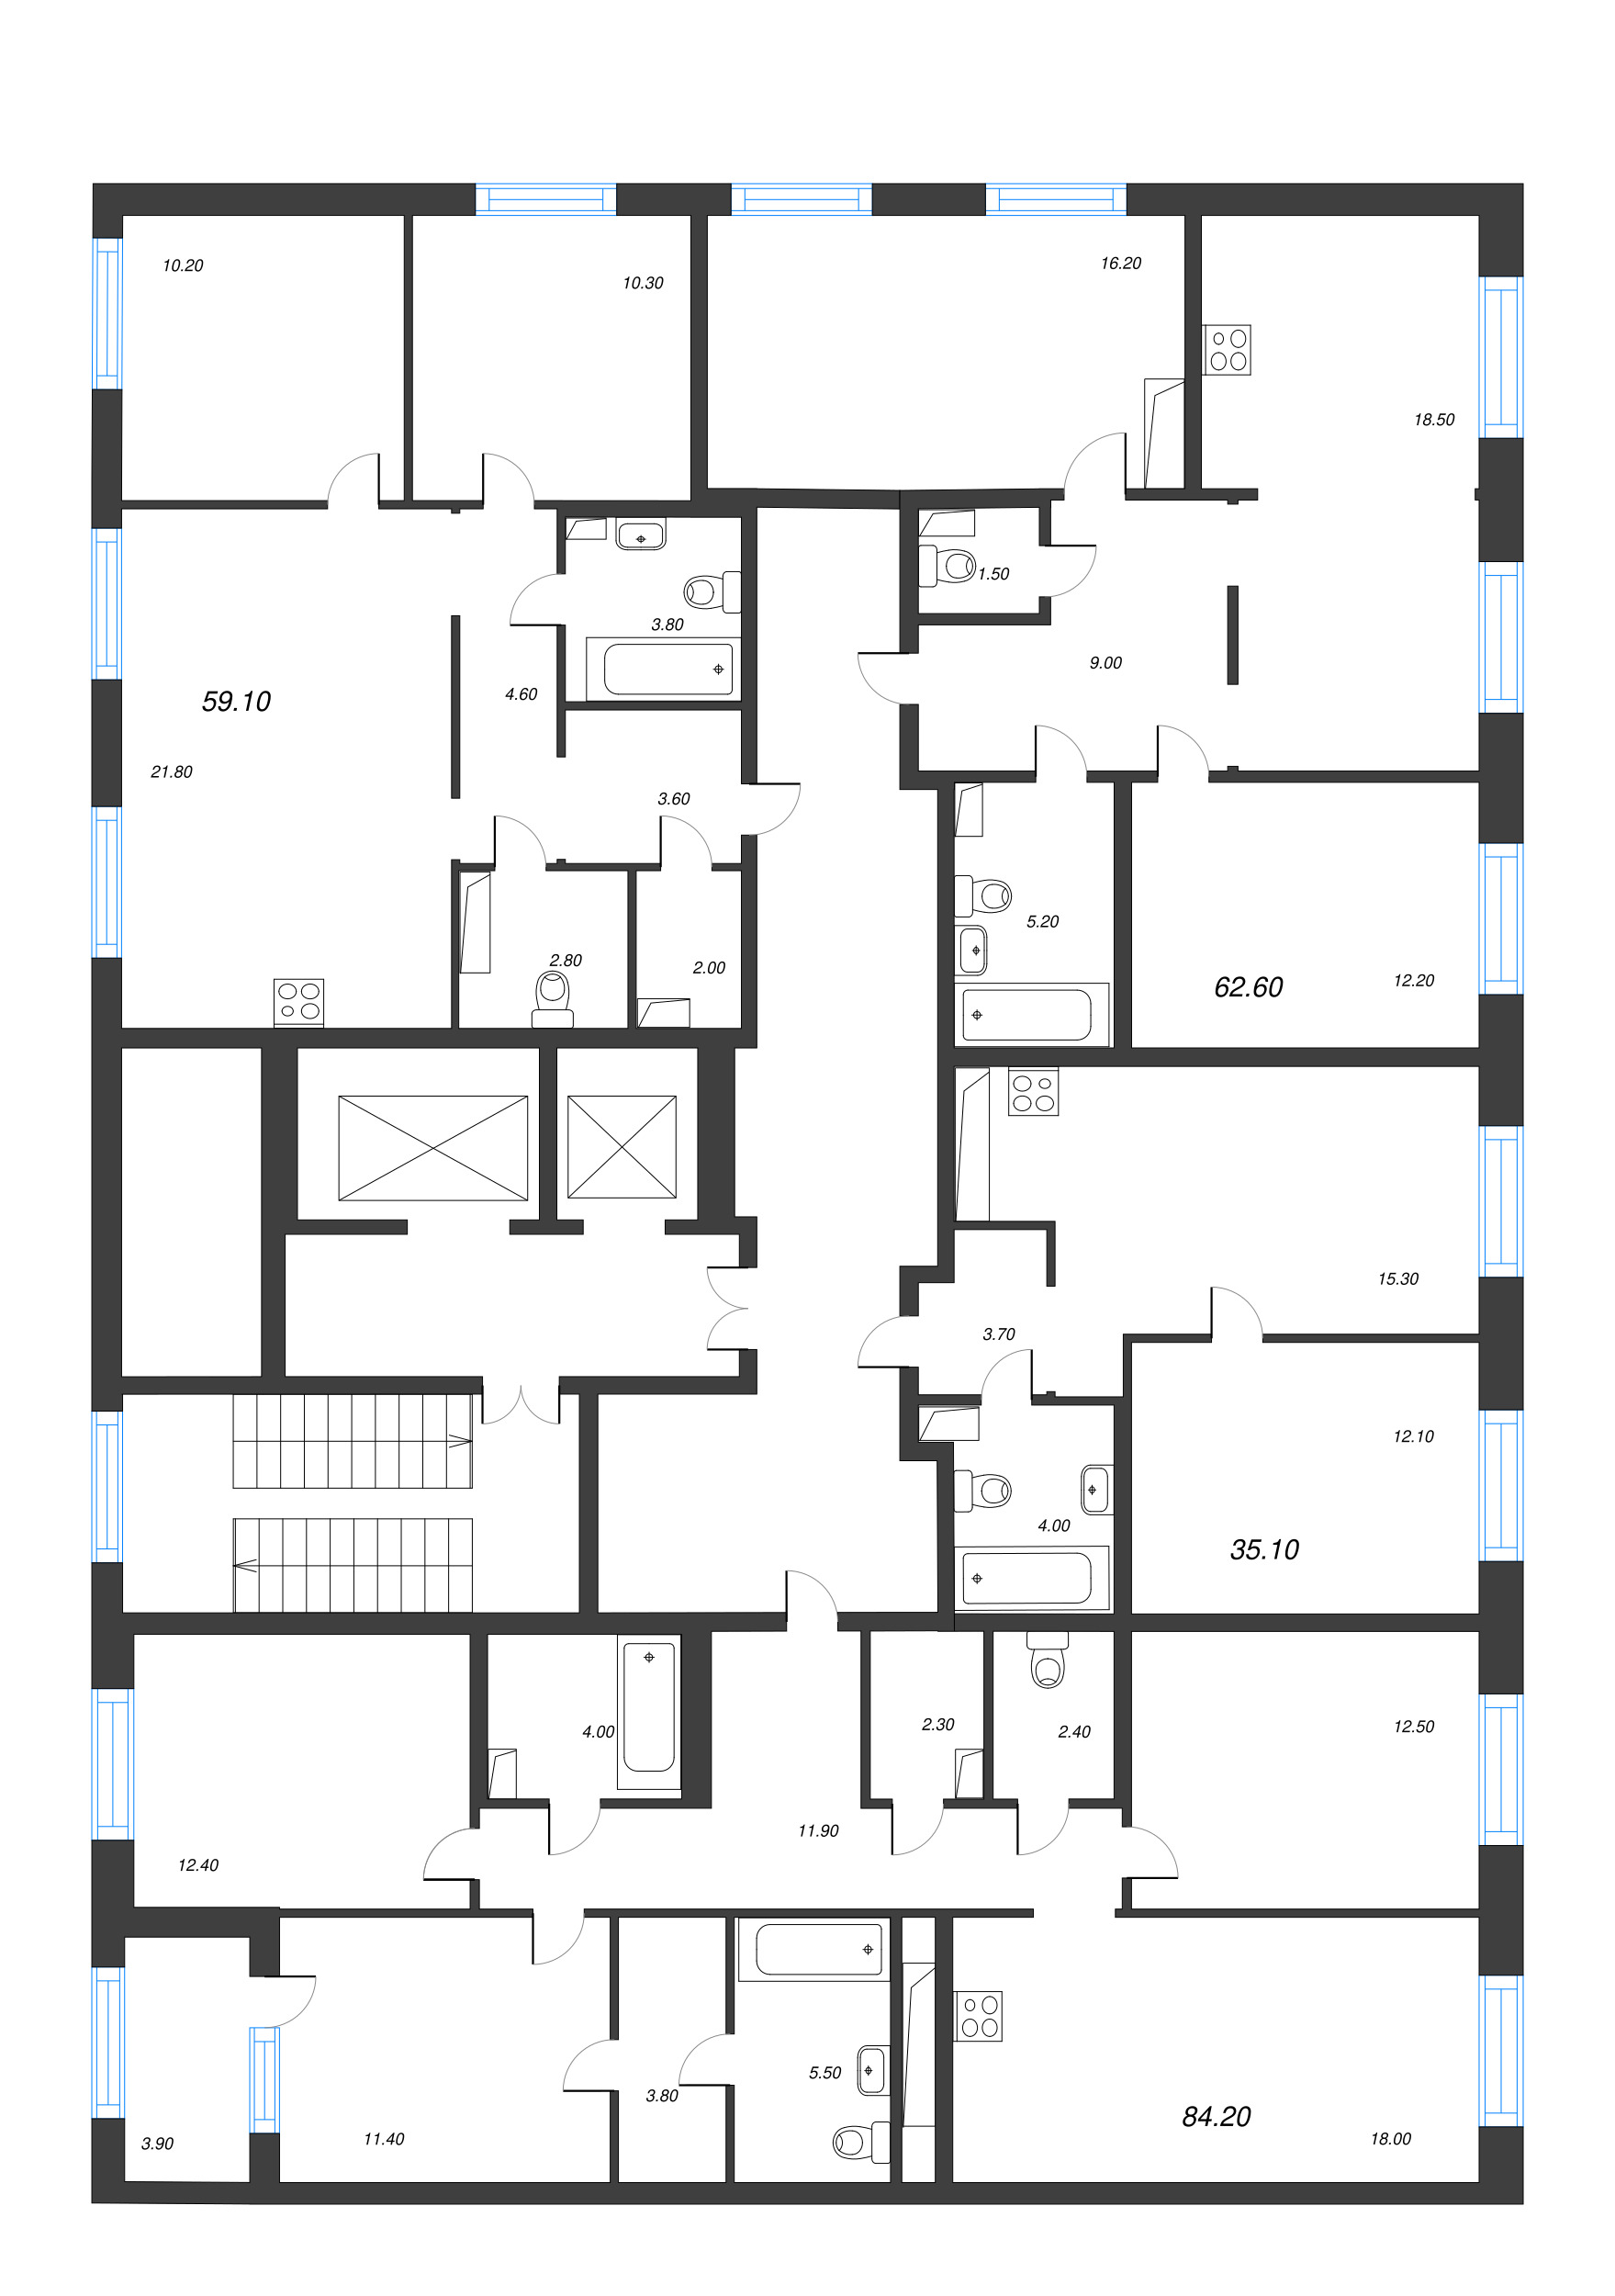 2-комнатная (Евро) квартира, 35.1 м² - планировка этажа